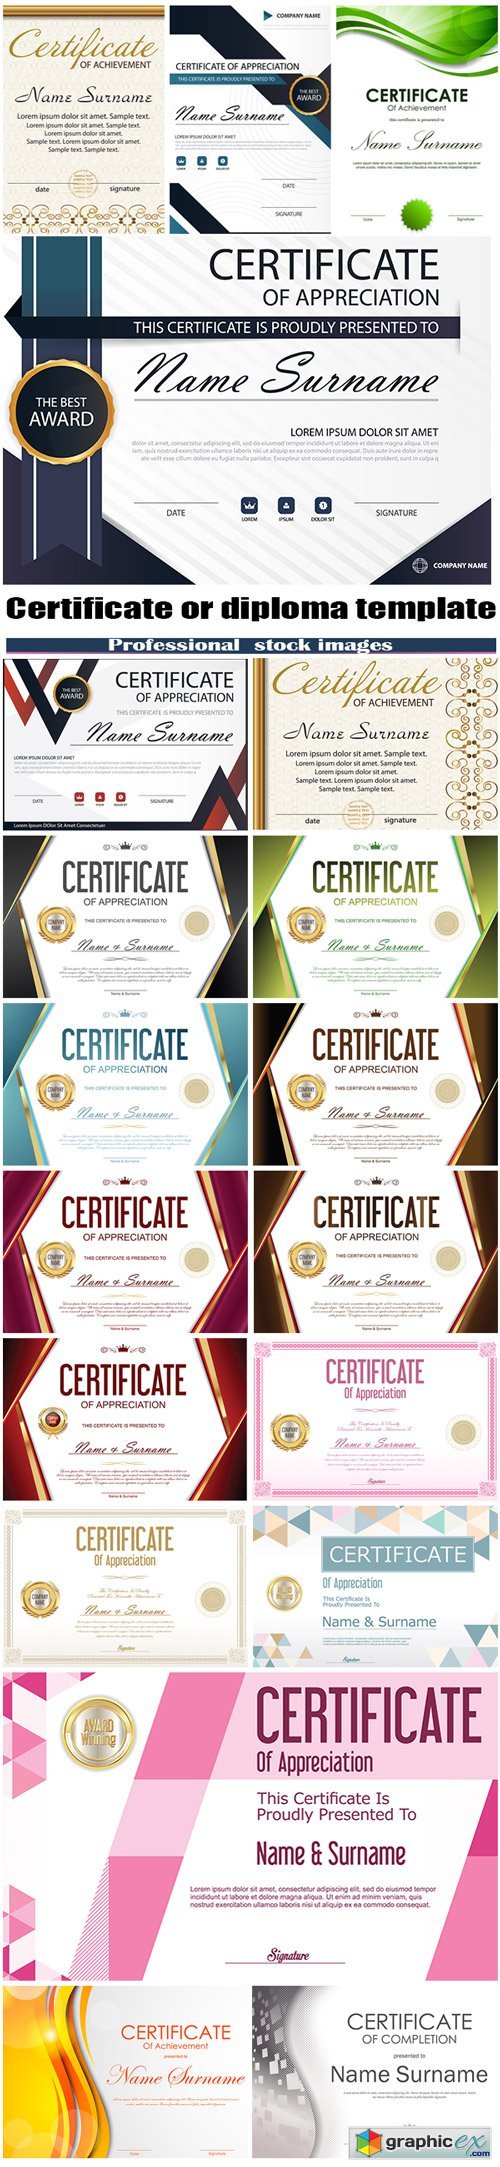 Certificate or diploma template #3